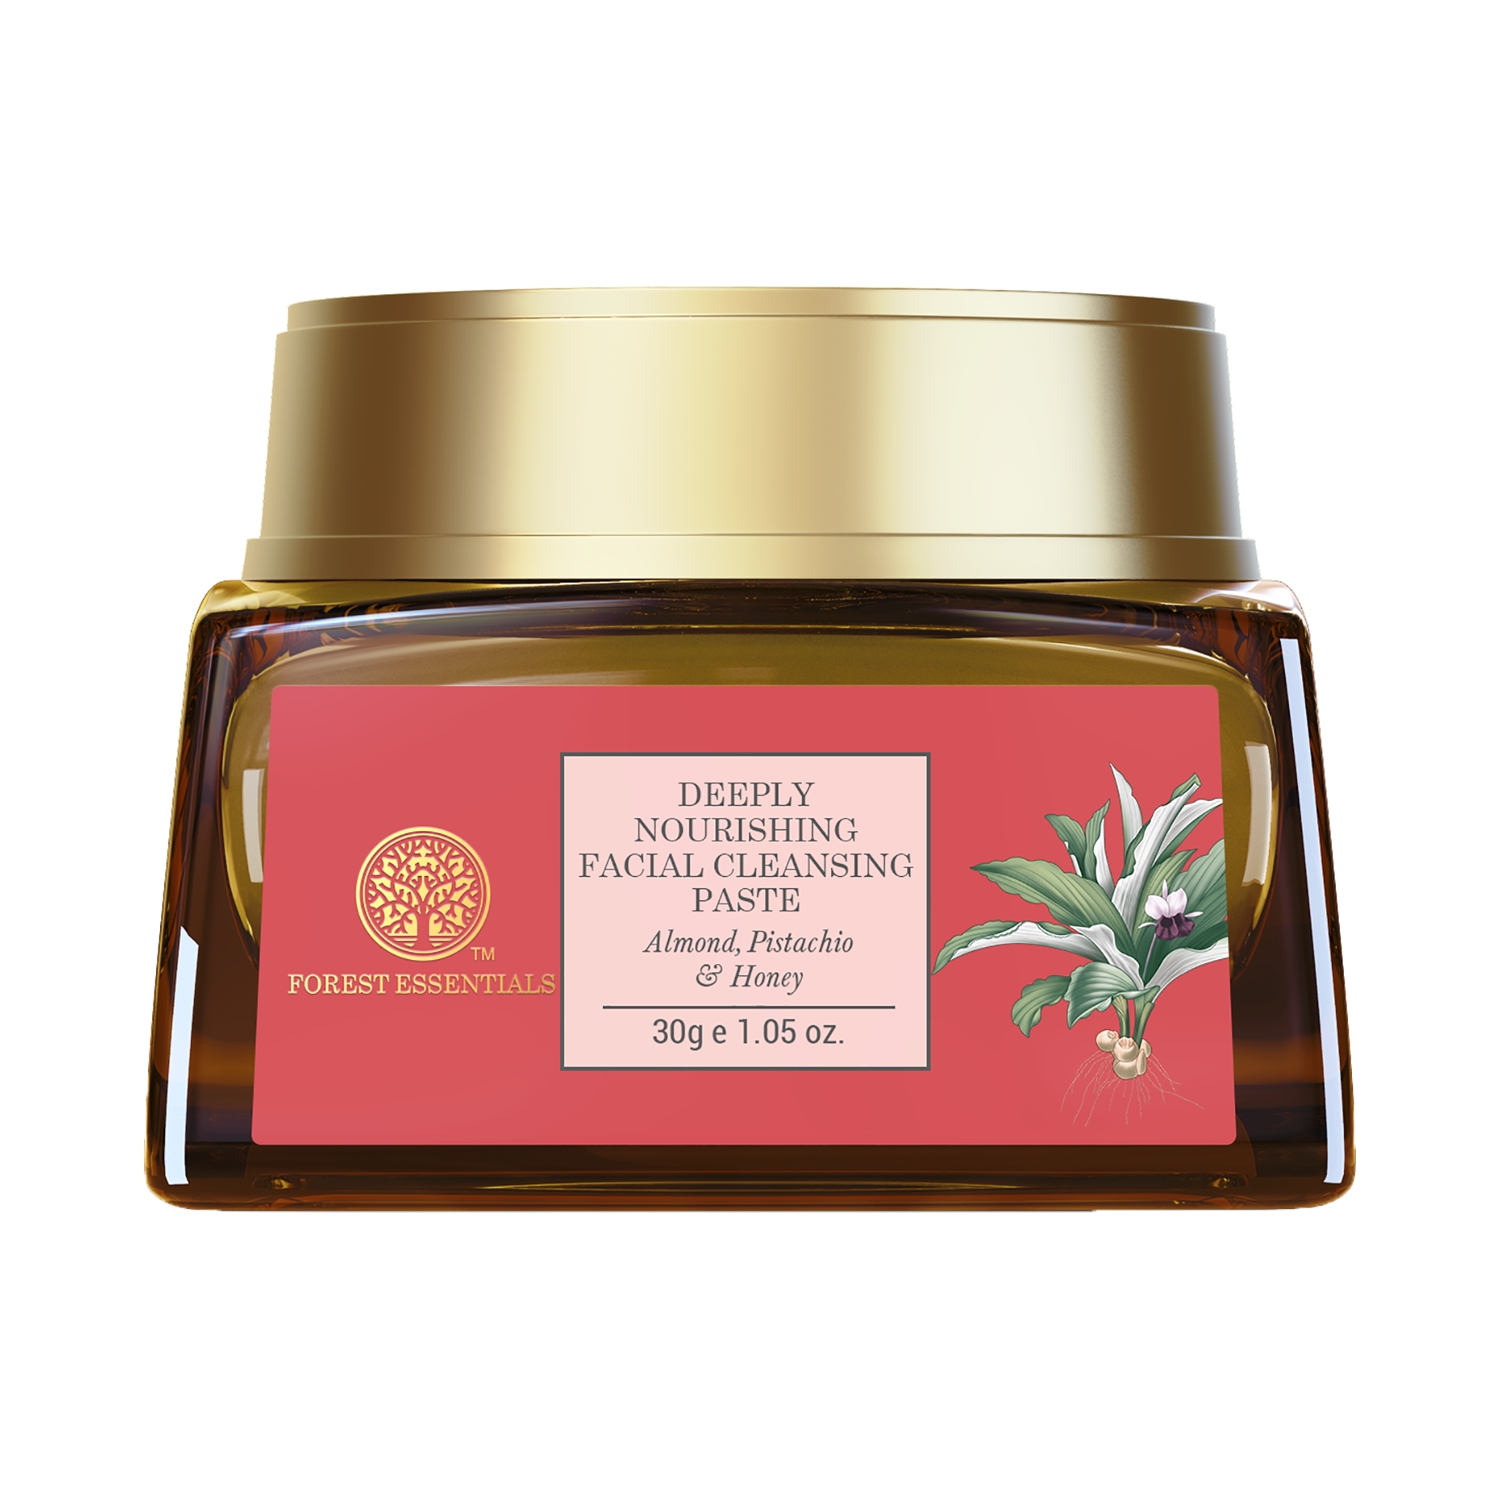 Forest Essentials | Forest Essentials Almond Pistachio & Honey Deeply Nourishing Facial Cleansing Paste (30g)